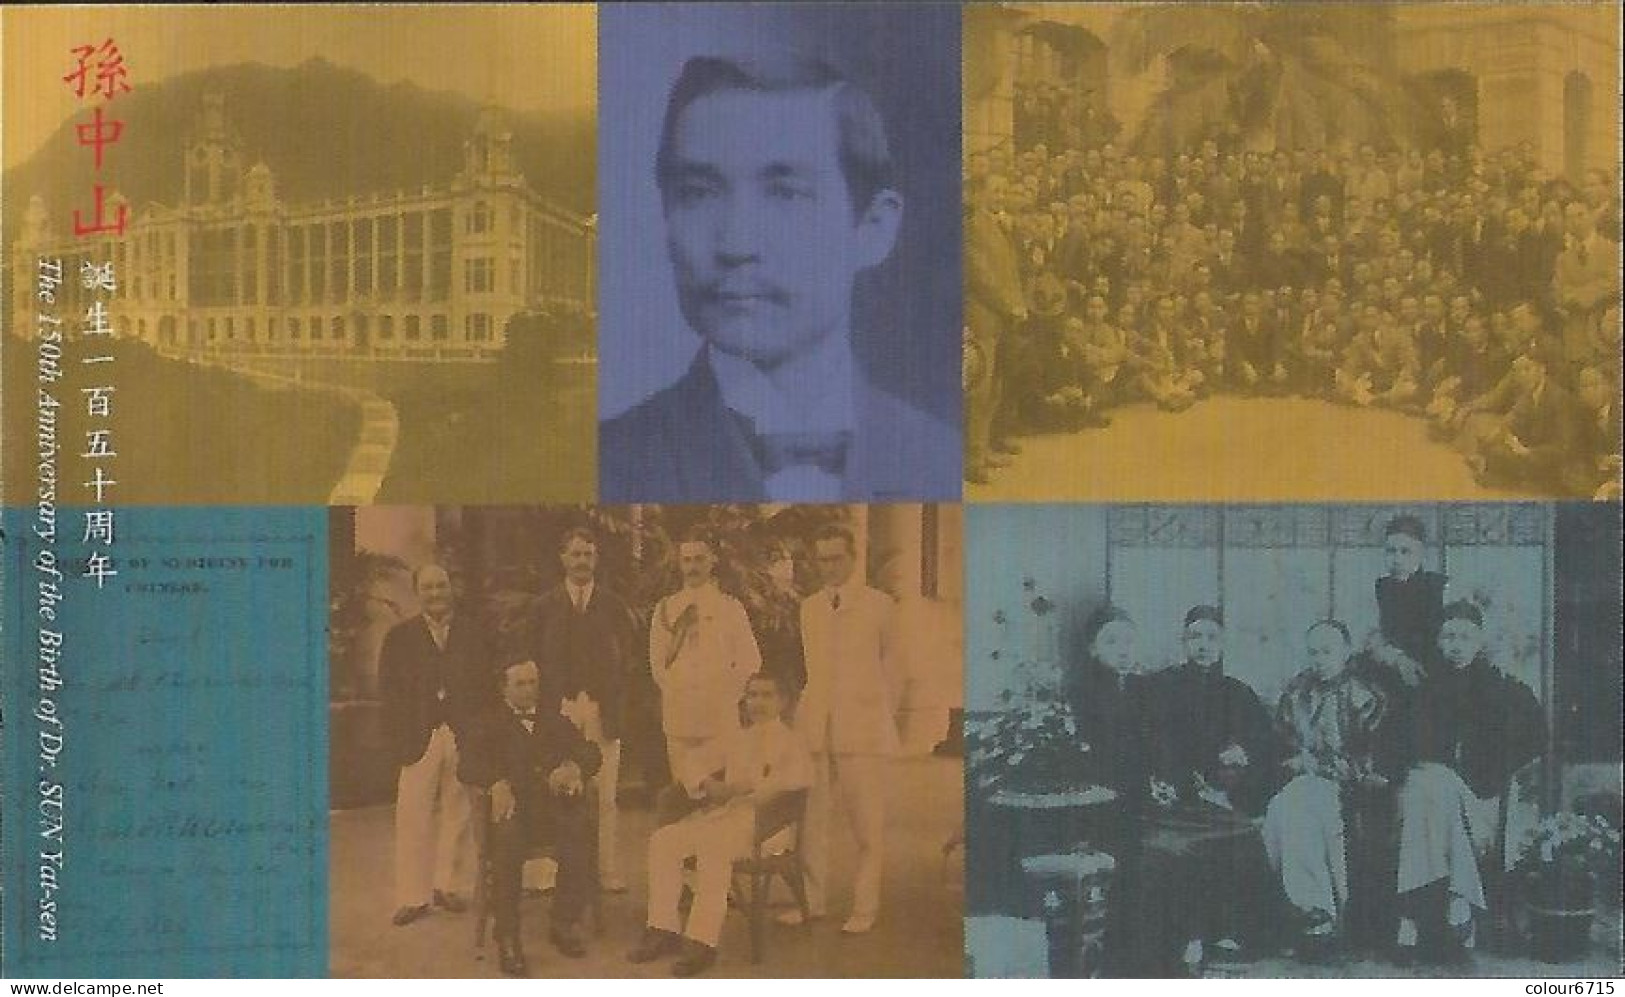 China Hong Kong 2016 The 150th Anniversary Of The Birth Of Sun Yat-sen Prestige Booklet MNH - Neufs